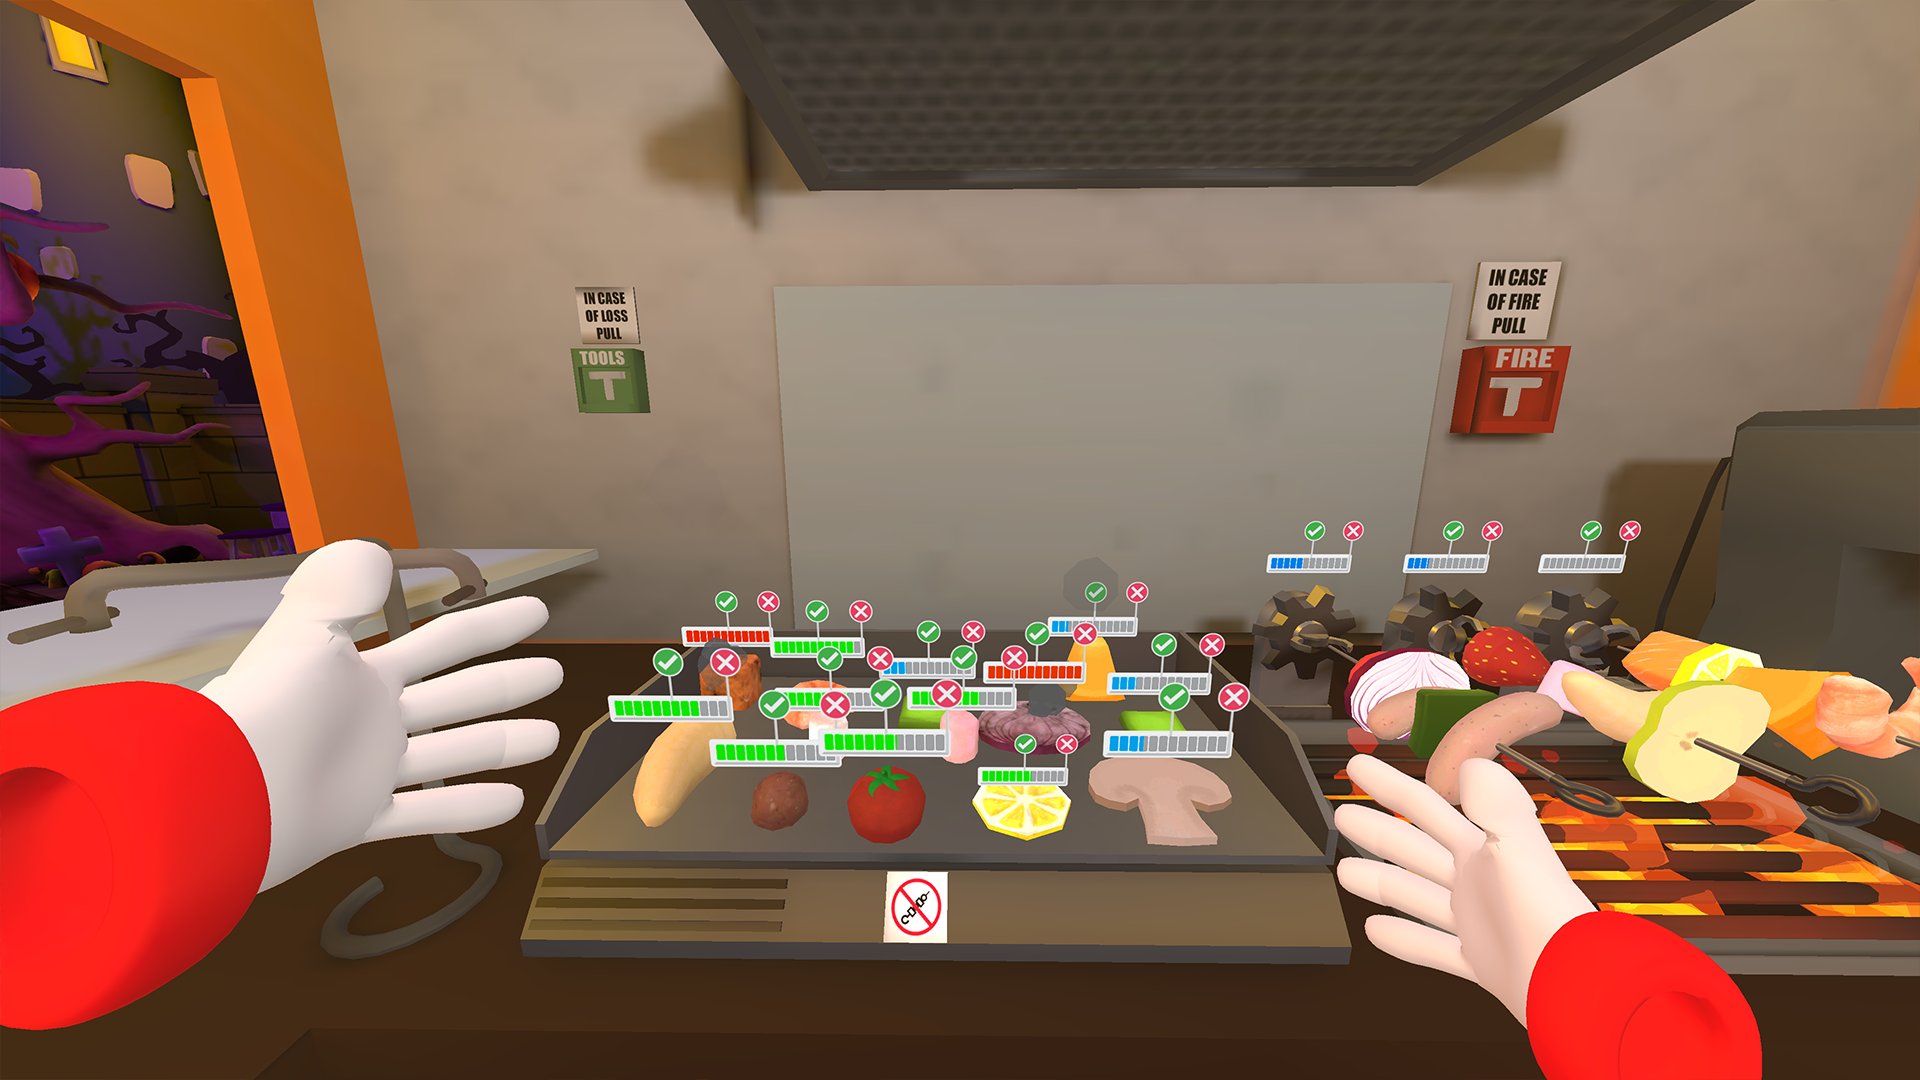 Kebab Chefs! - Restaurant Simulator no Steam